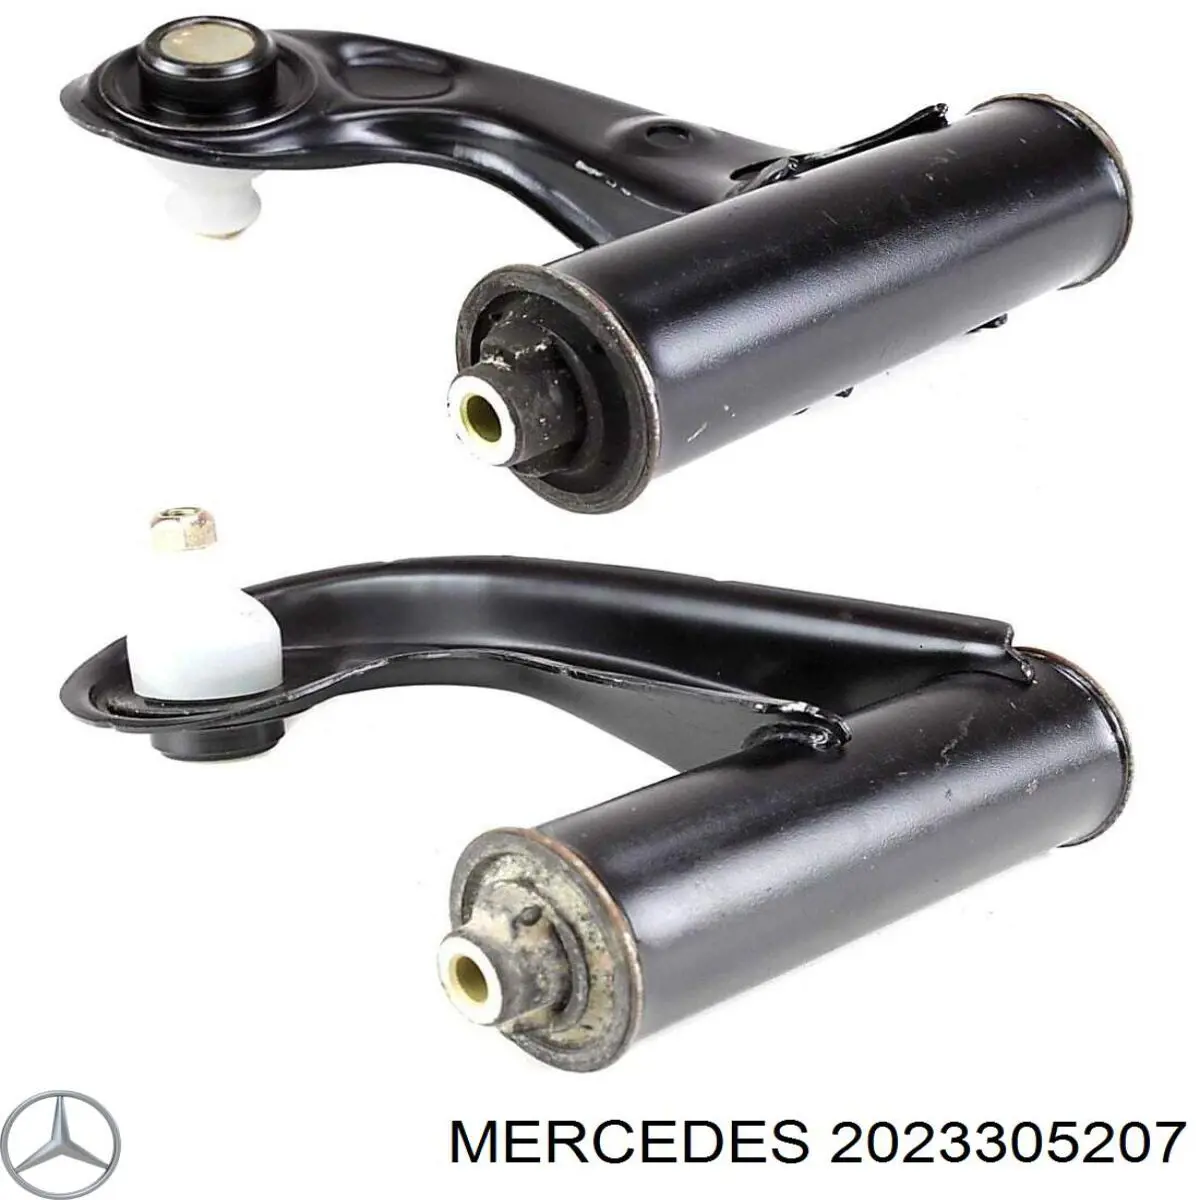 A2023305207 Mercedes barra oscilante, suspensión de ruedas delantera, inferior derecha